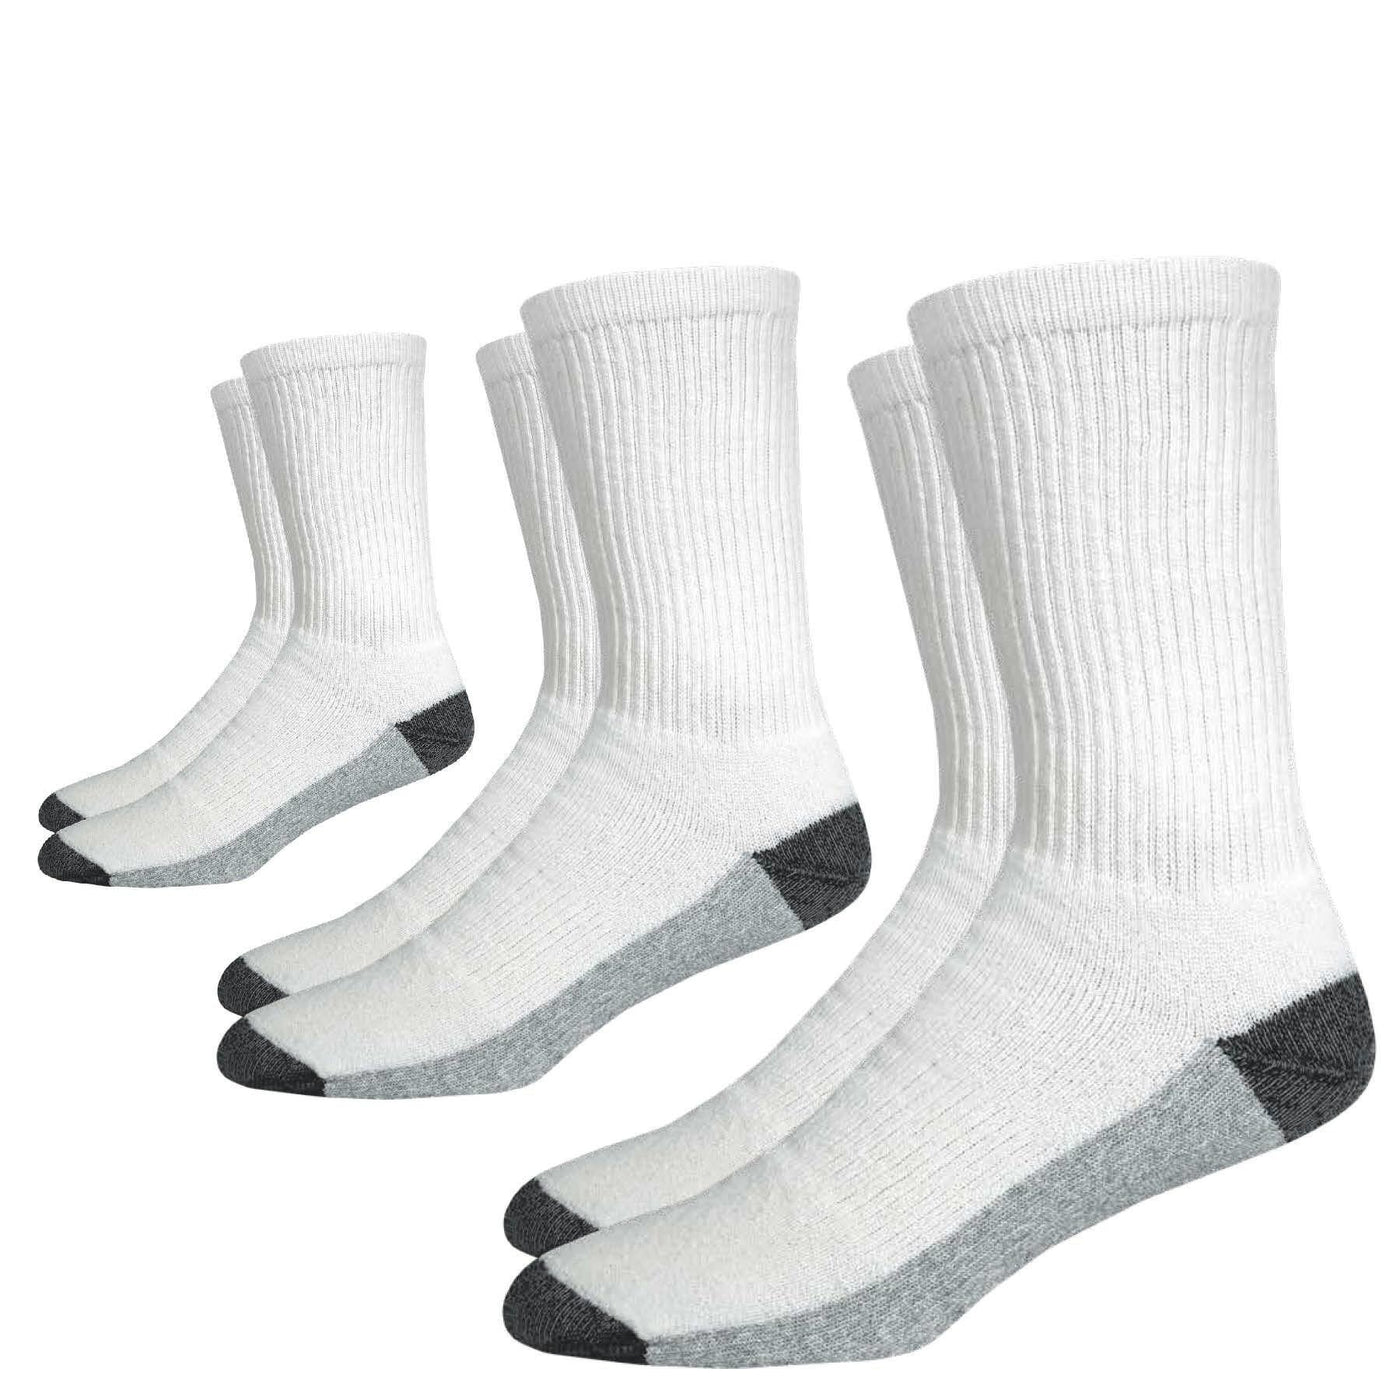 Foot Comfort Everyday Cotton Blend Crew Socks 3 PAIRS